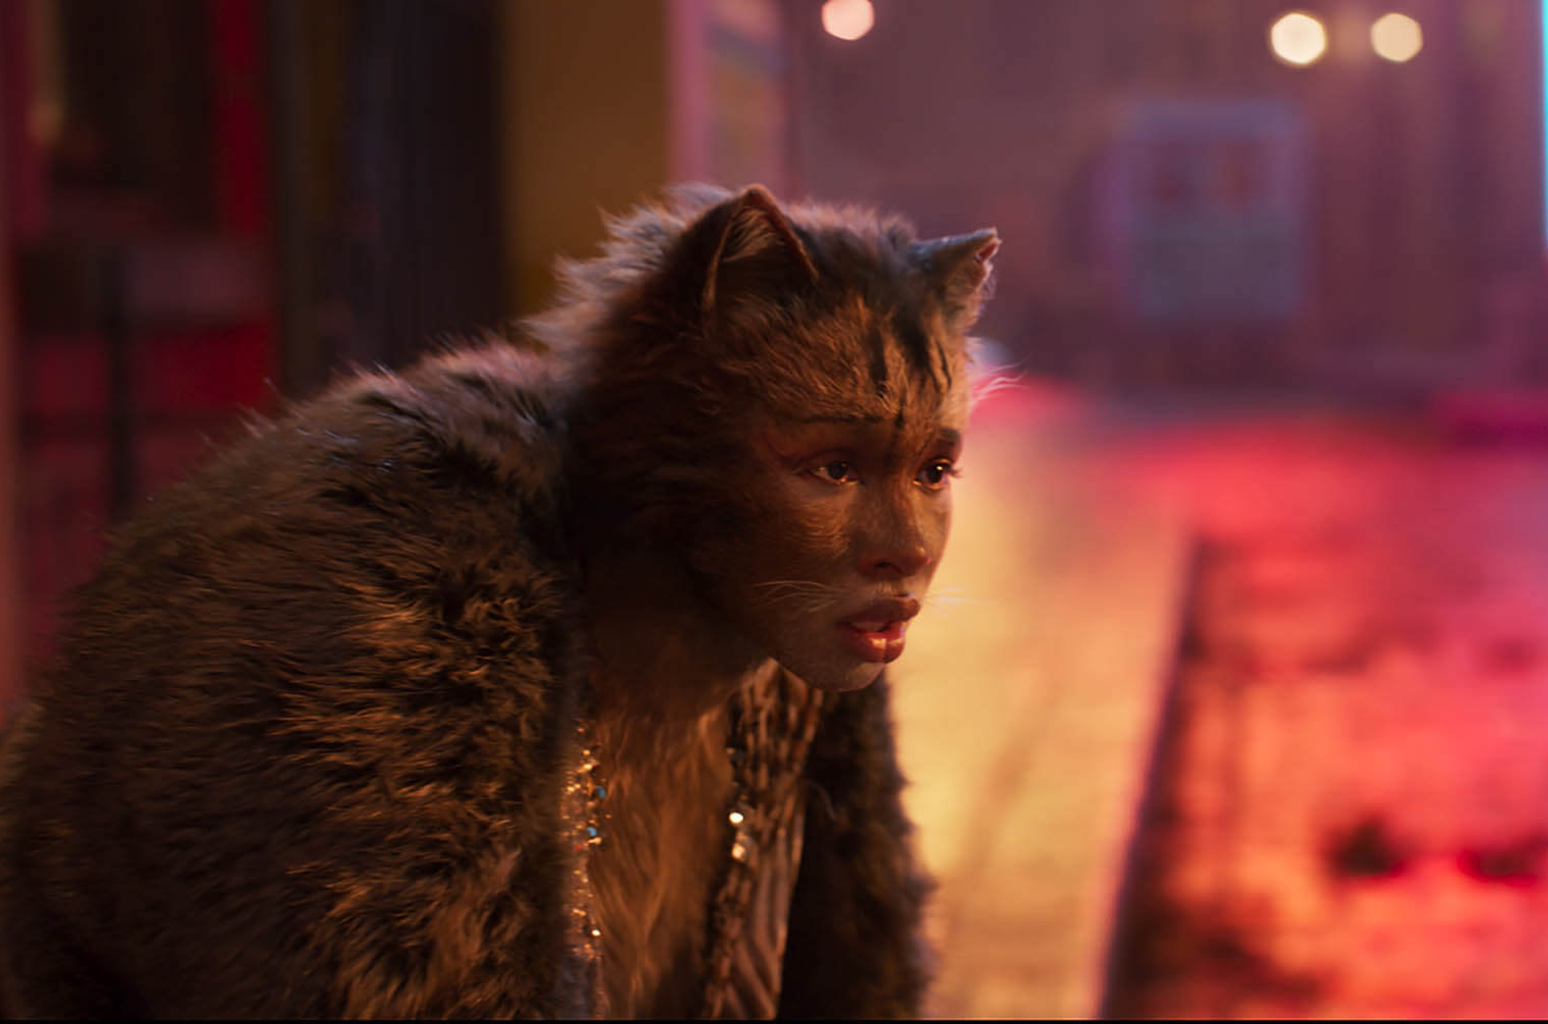 'Cats' Box Office Bust: A Tale Spurned by Families - www.billboard.com